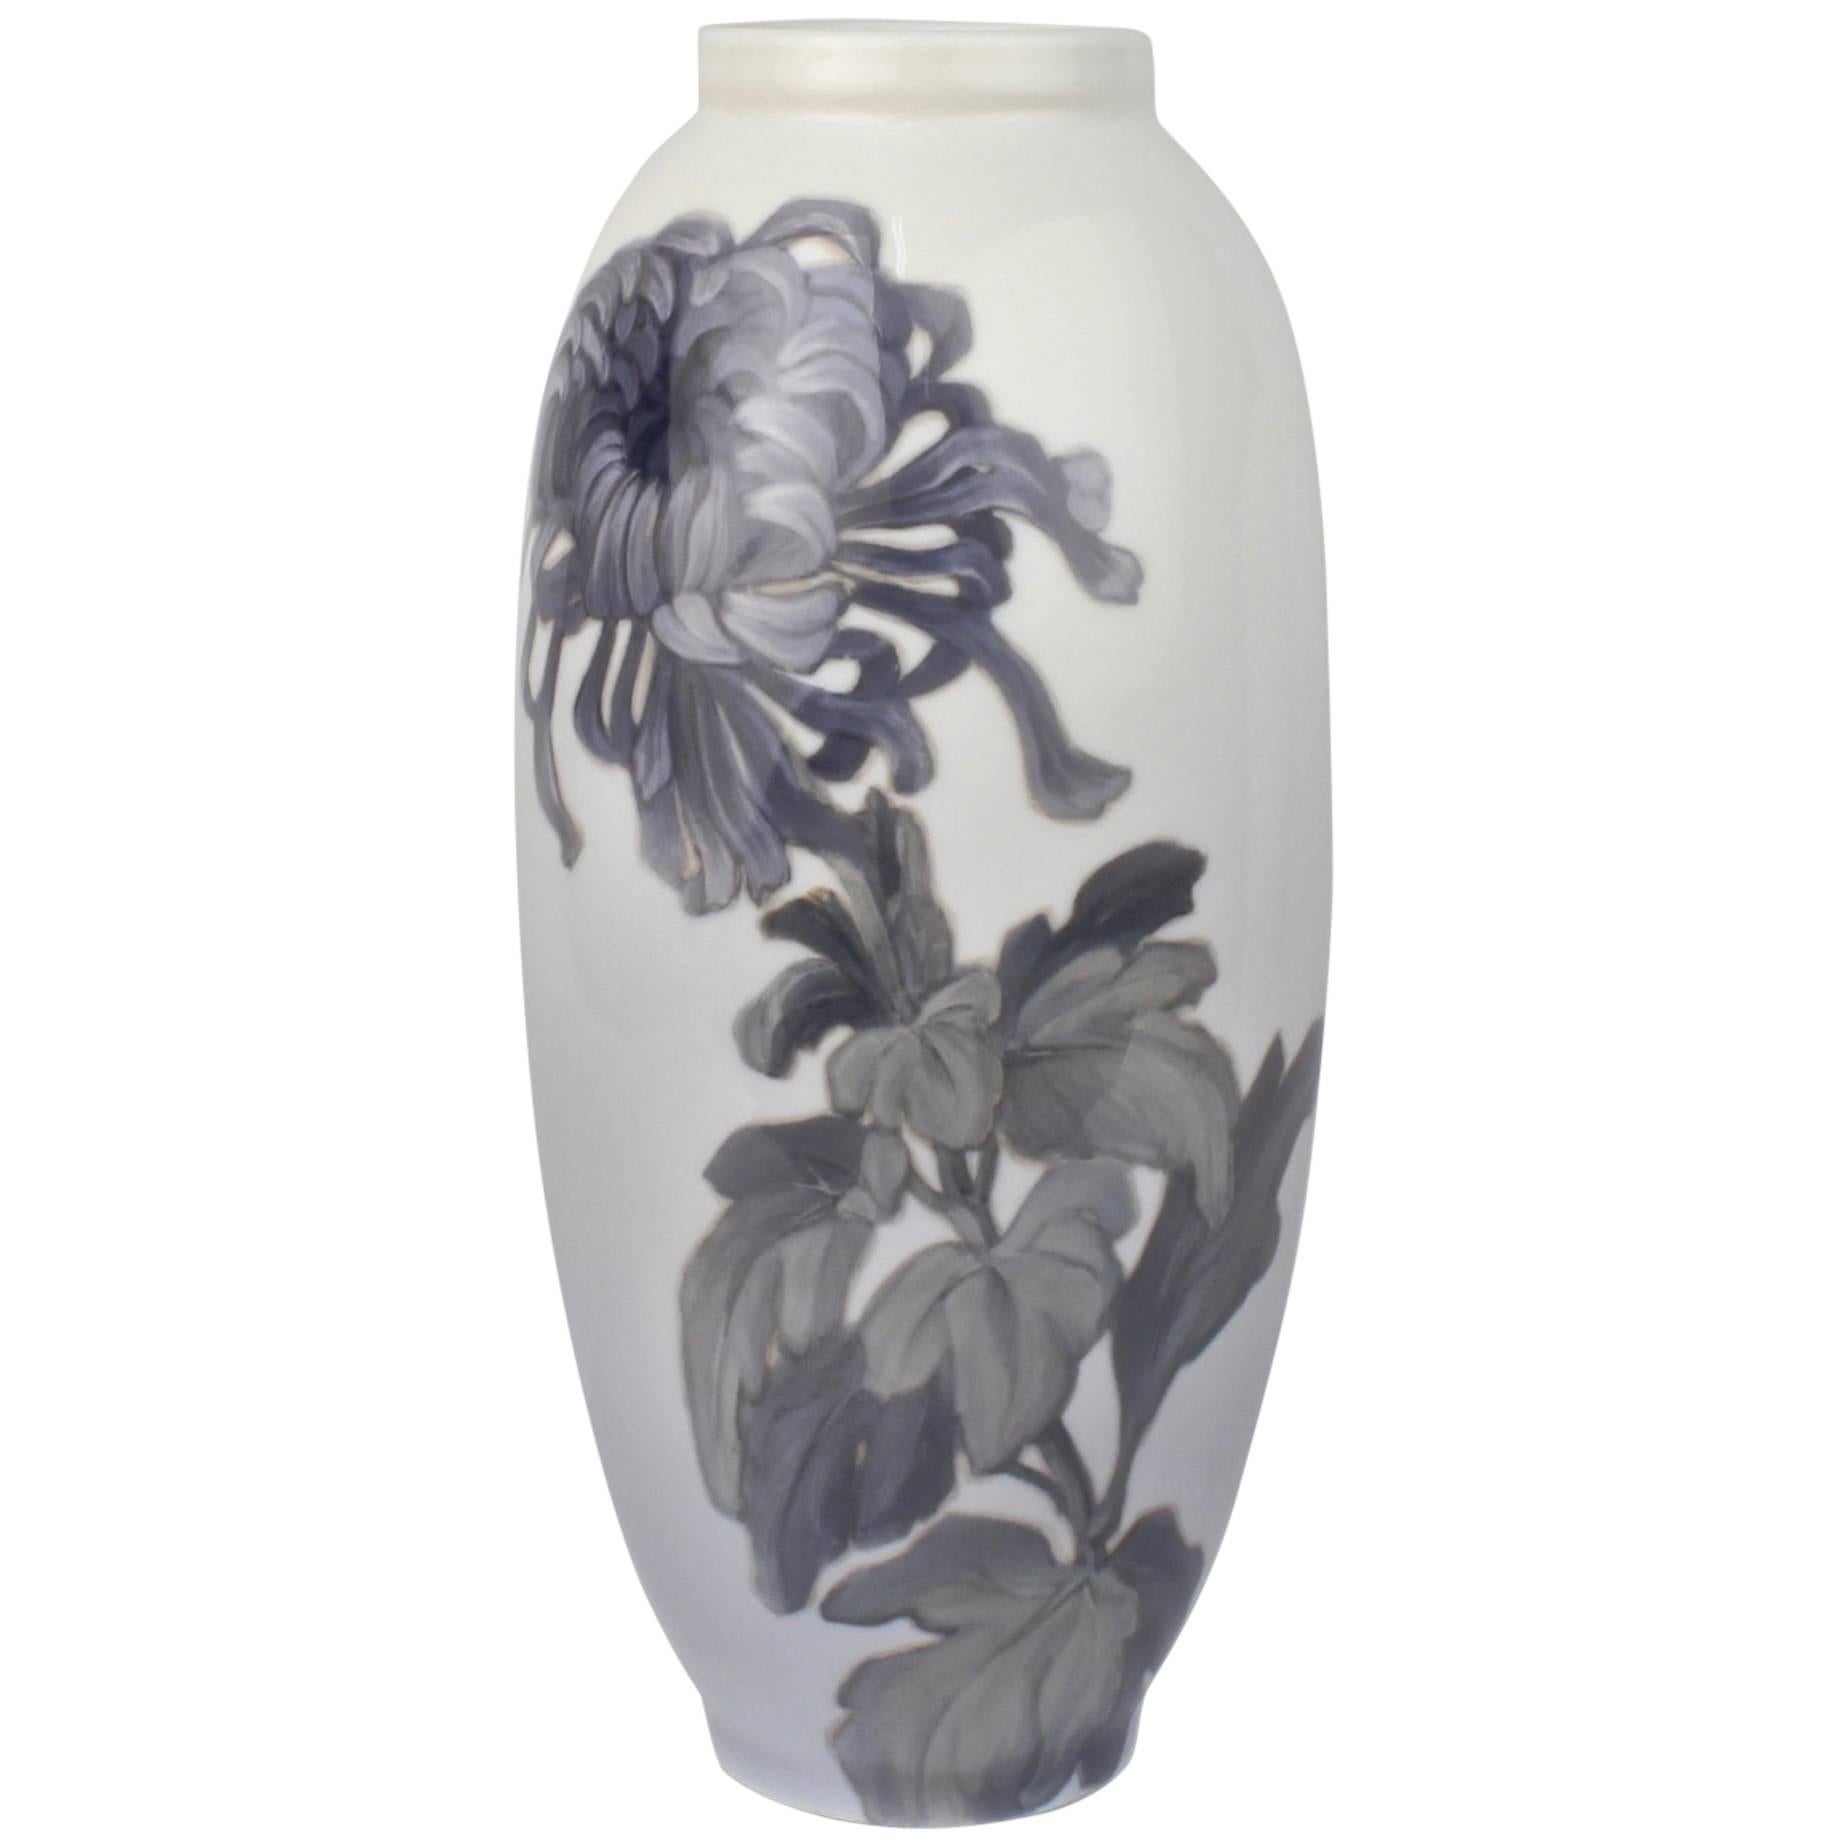 Early 20th Century Royal Copenhagen Porcelain Vase with a Large Chrysanthemum